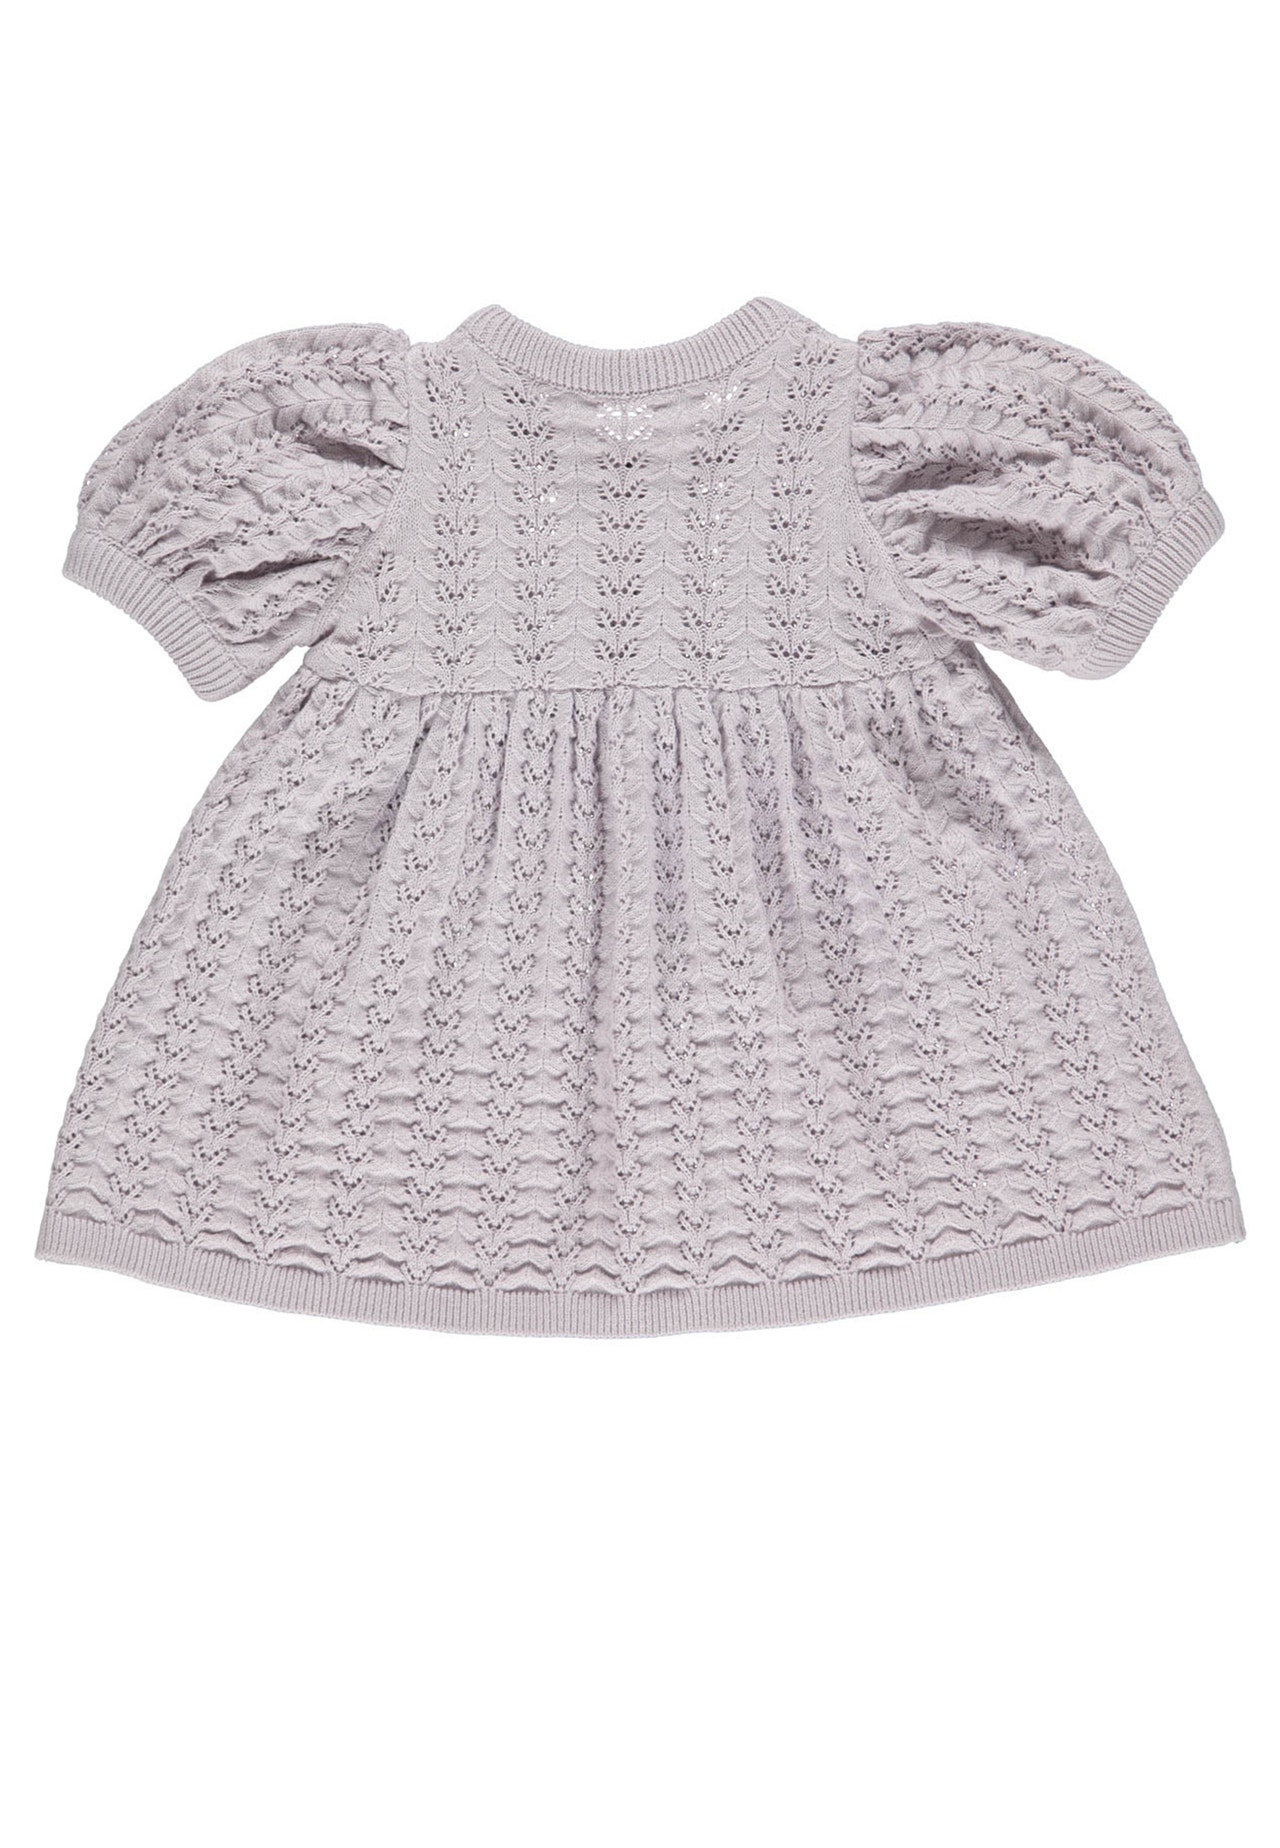 MAMA.LICIOUS müsli Knit dress -Soft Lilac - 1553001100